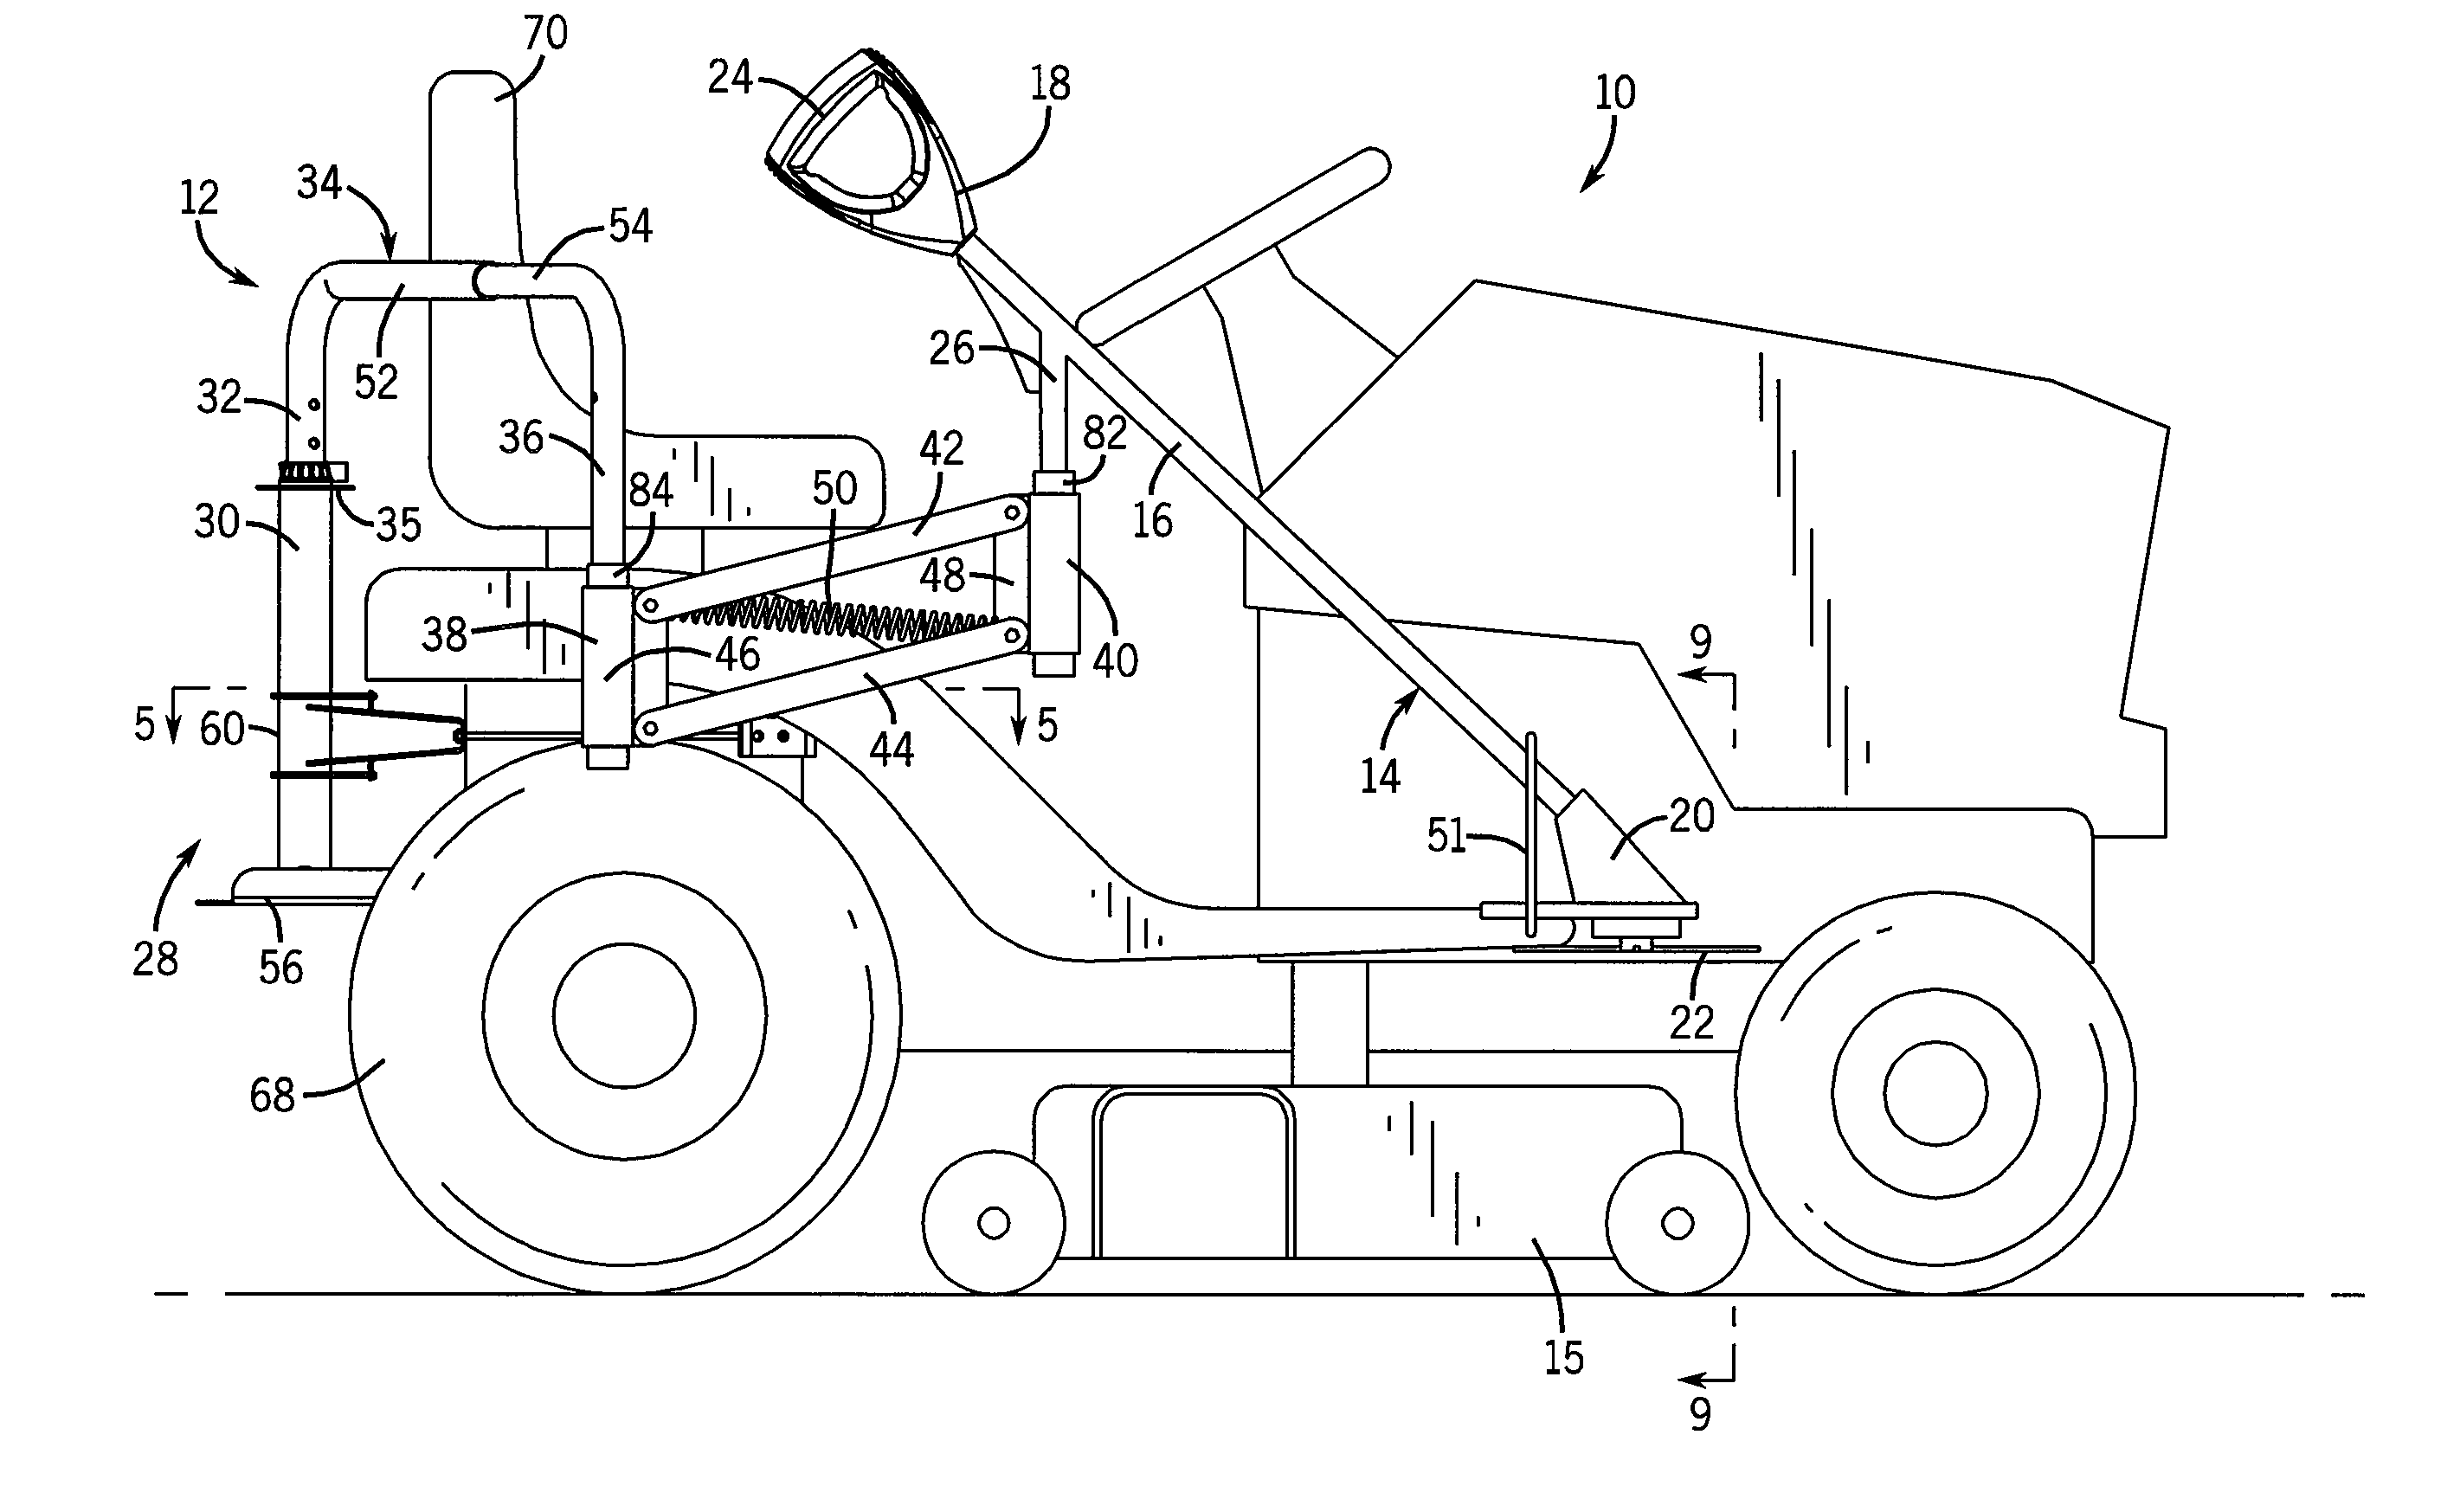 Accessory mount arrangement for a lawn vehicle